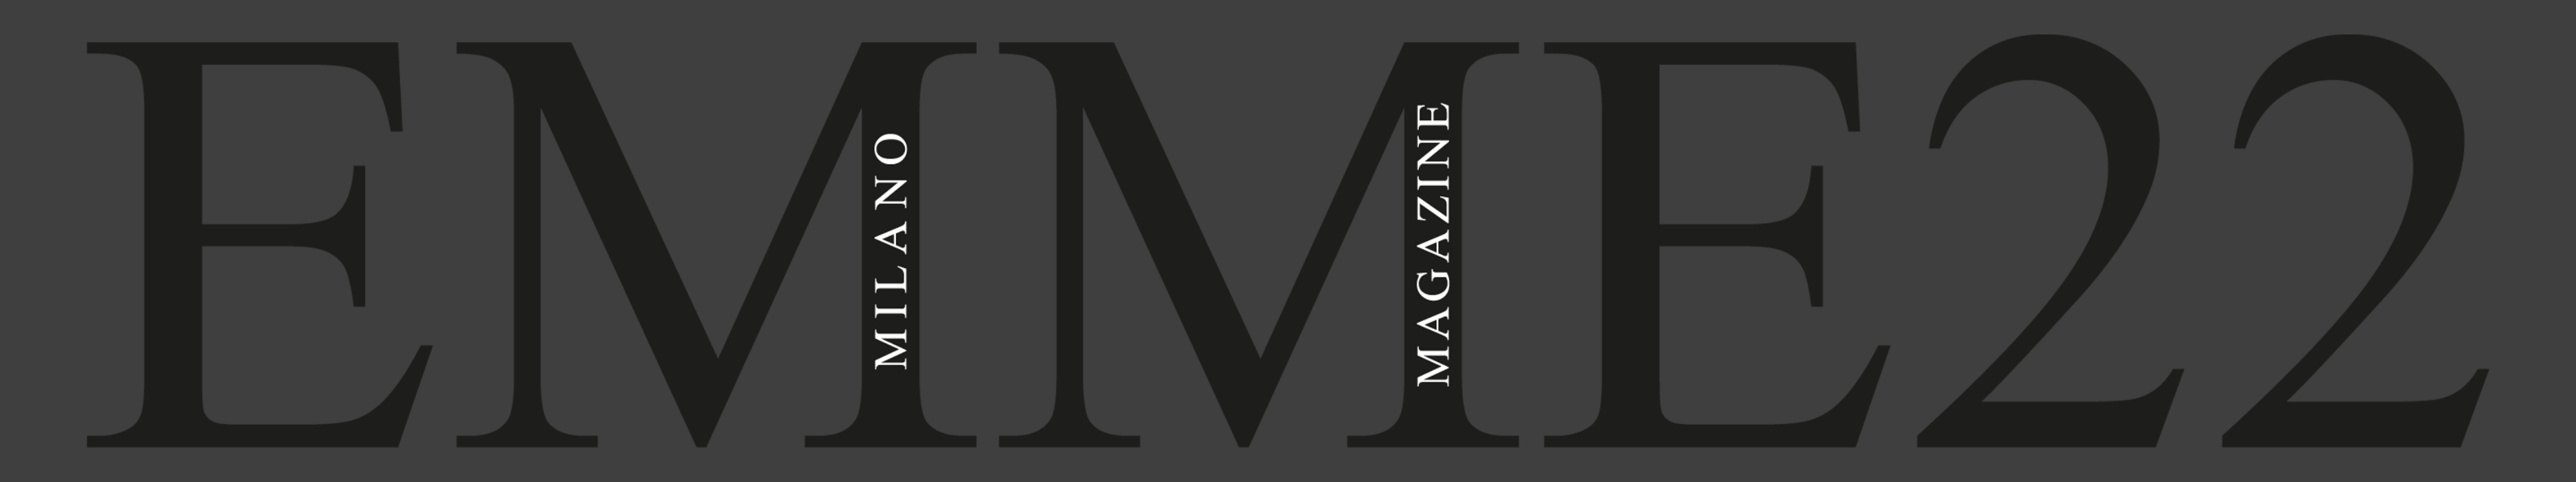 EMME22 - È una rivista di Moda, Arte&Design, Salute-Wellness-Beauty, Libri, Food&Beverage, No Profit, Sport, Viaggi. Foto del Mese